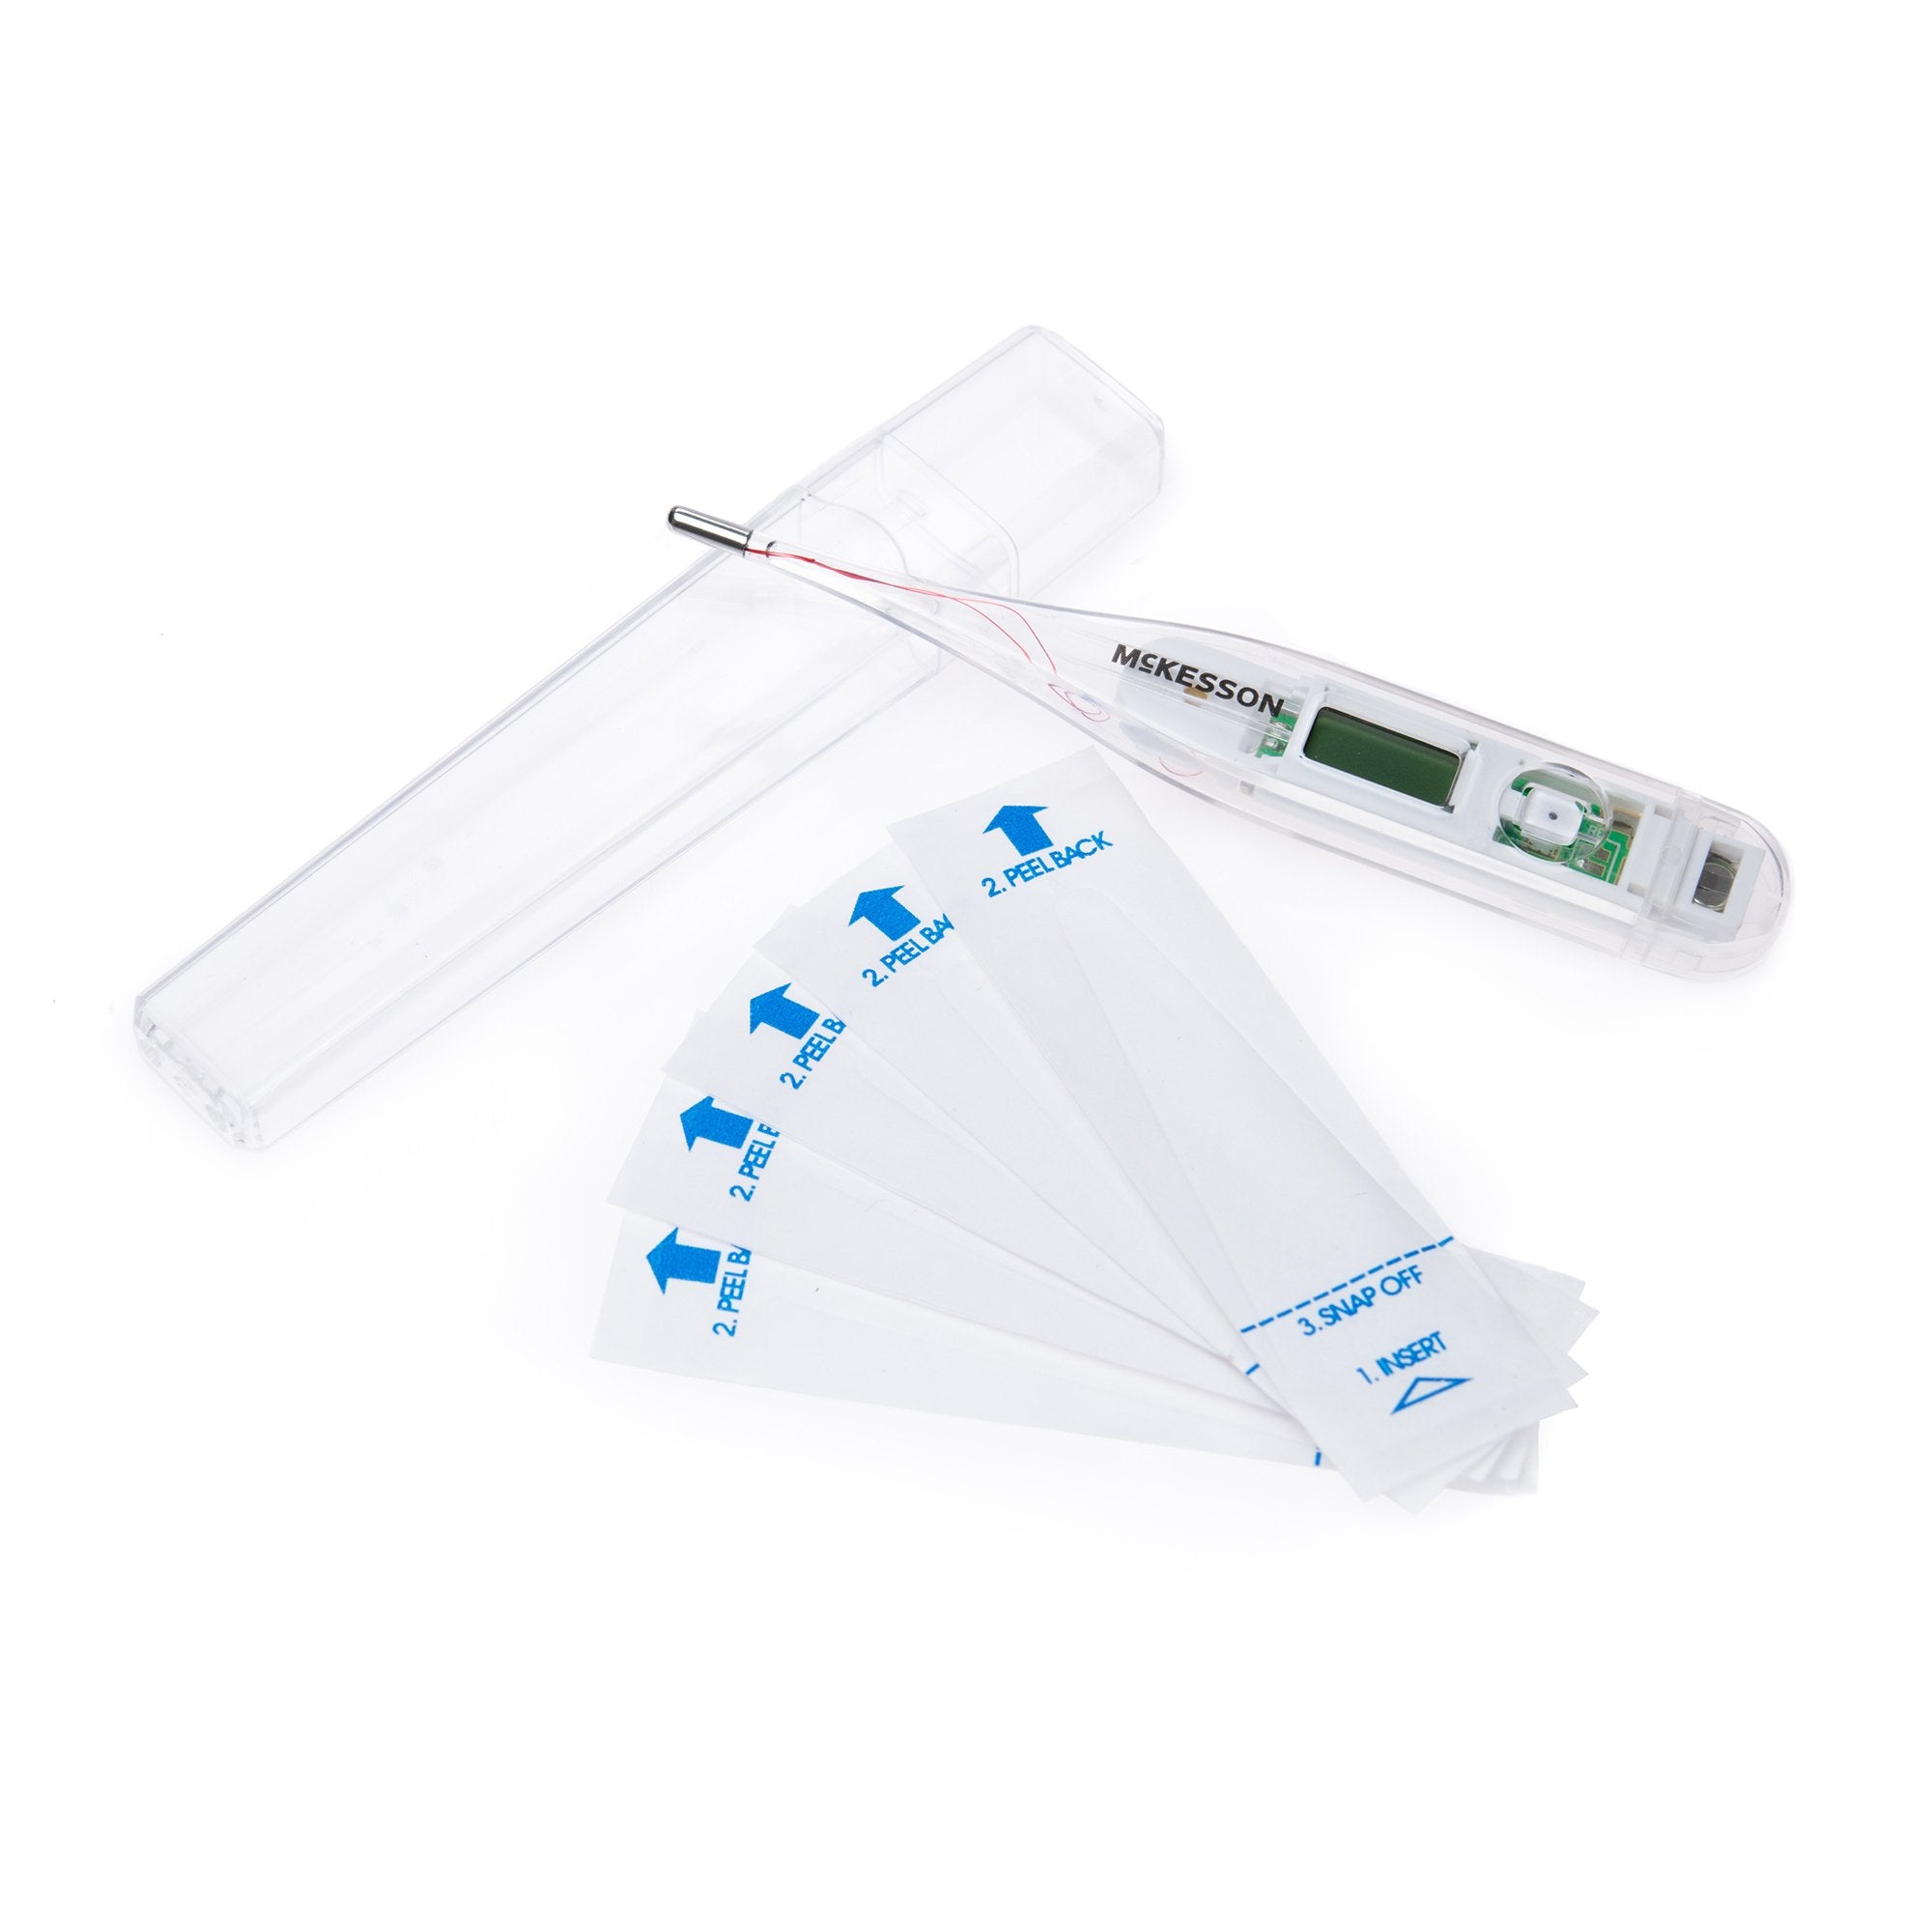 Digital Stick Thermometer McKesson Oral / Rectal / Axillary Probe Handheld